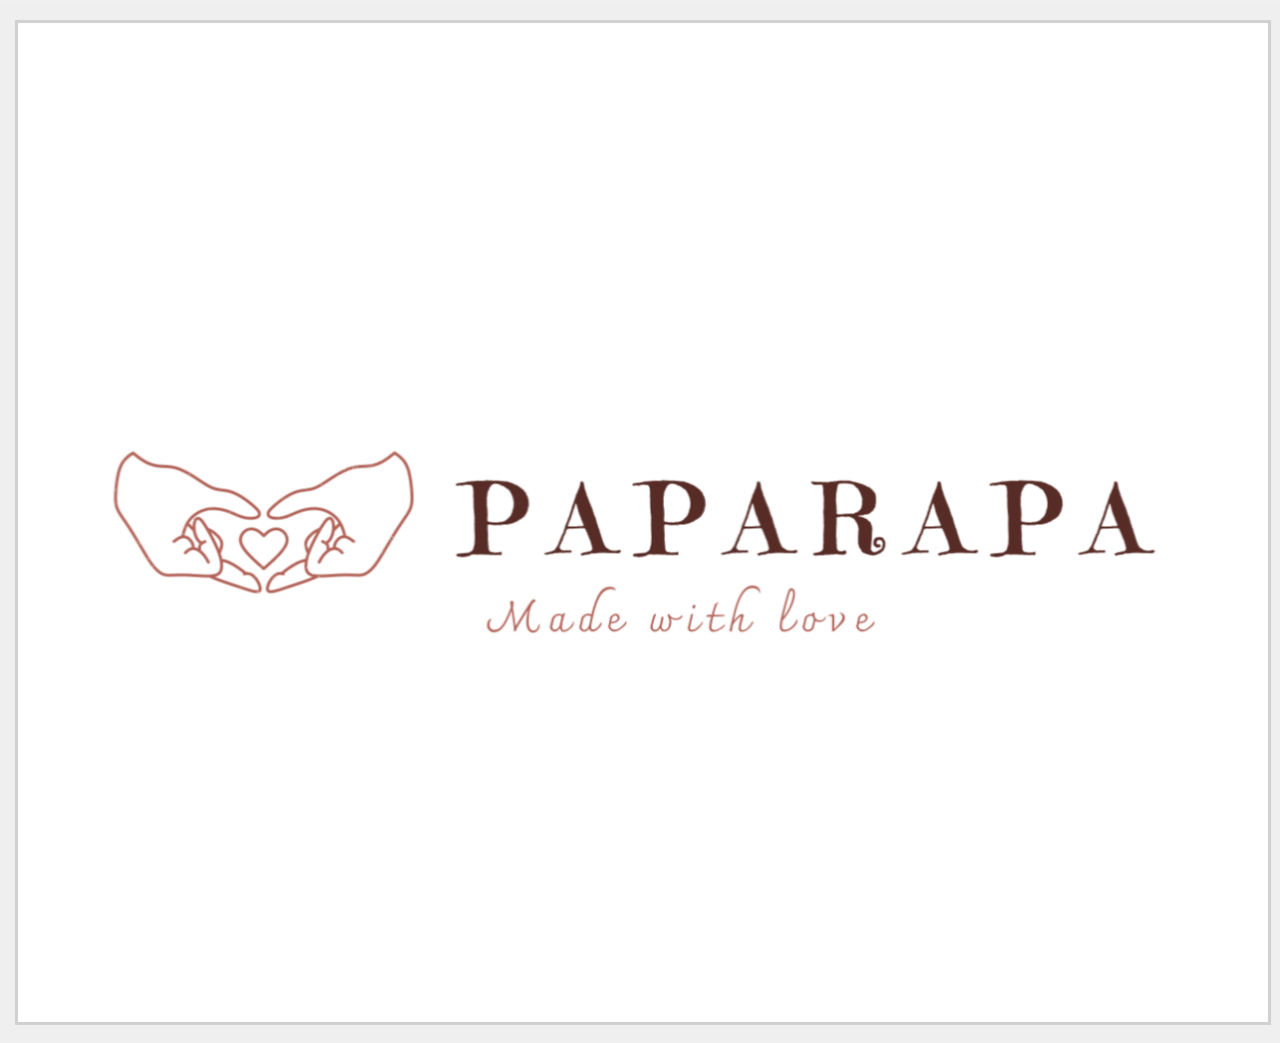 Paparapa 's web page